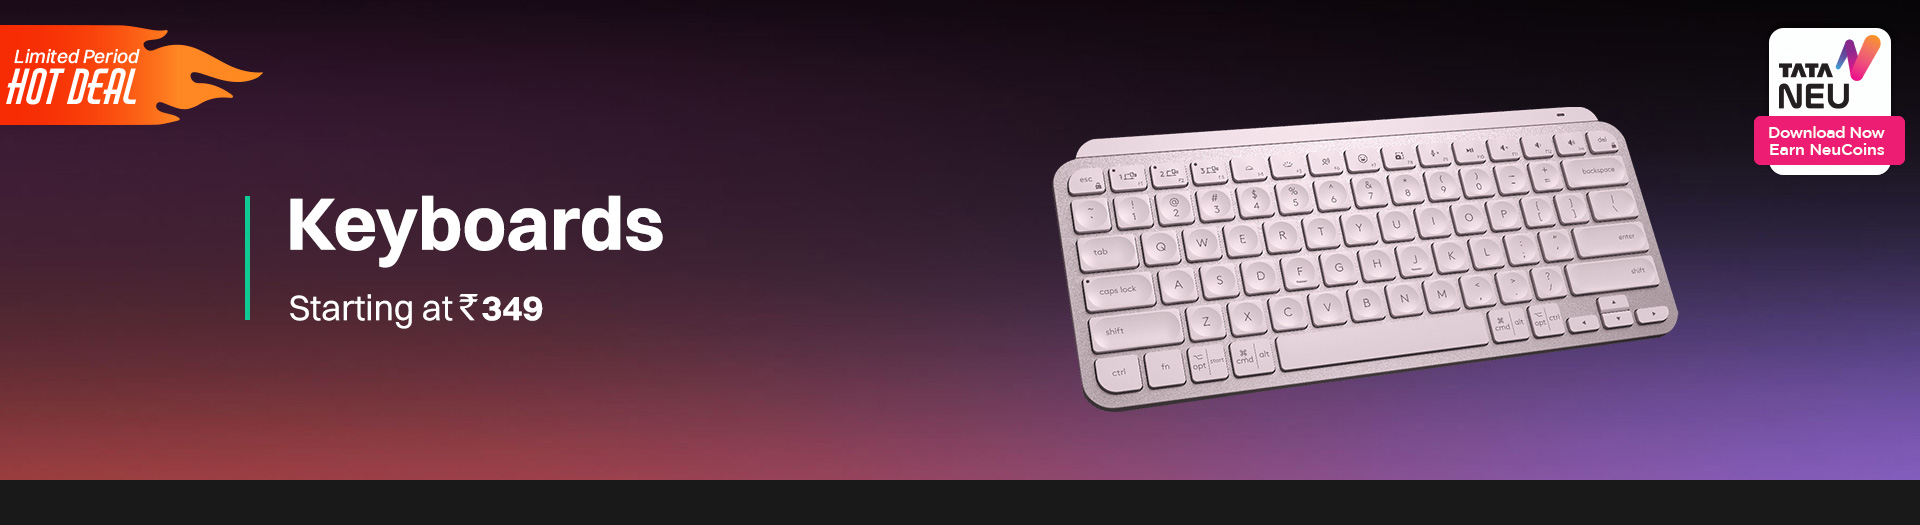 croma.com - Keyboards